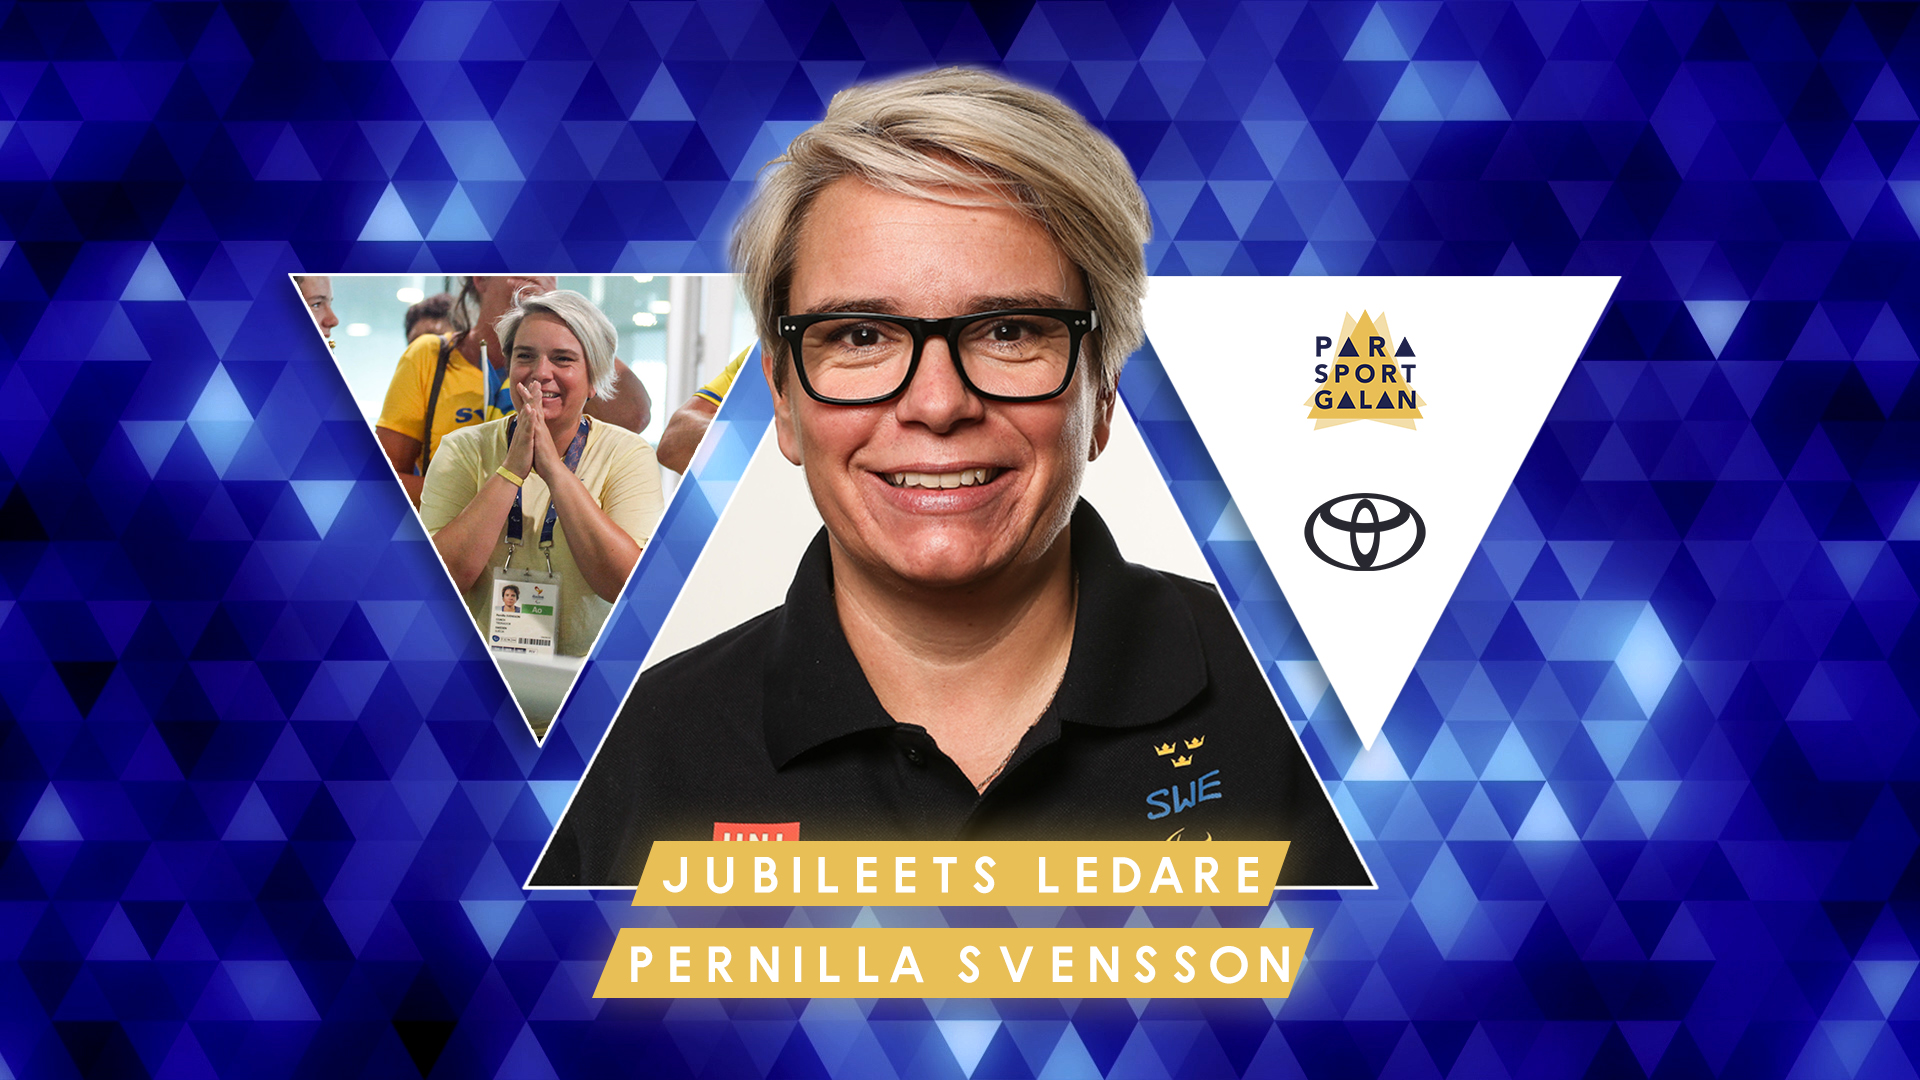 Pernilla Svensson - jubileets ledare